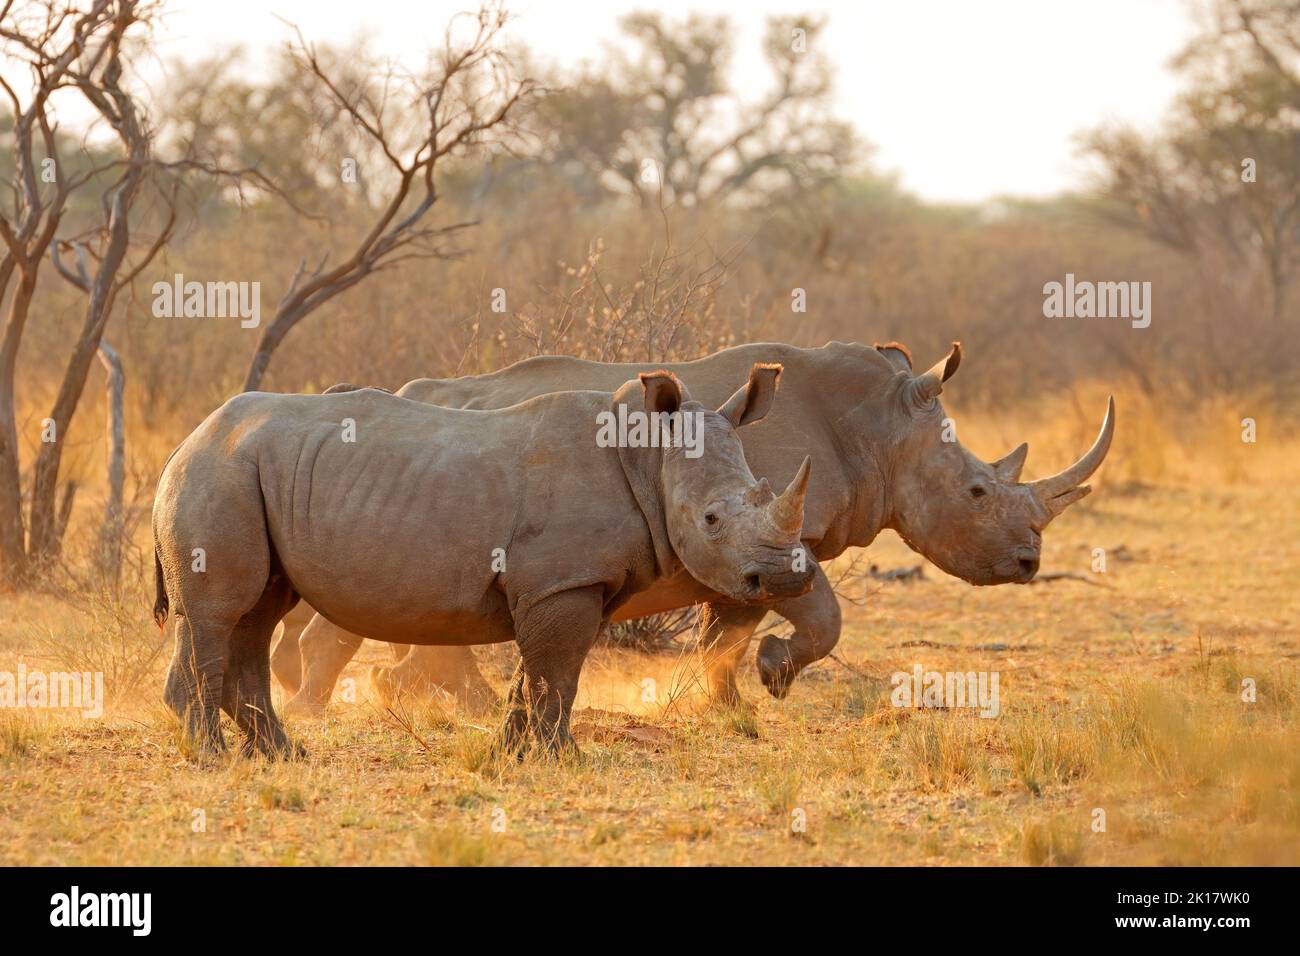 Alert white rhinoceros (Ceratotherium simum) in dust at sunset, South Africa Stock Photo